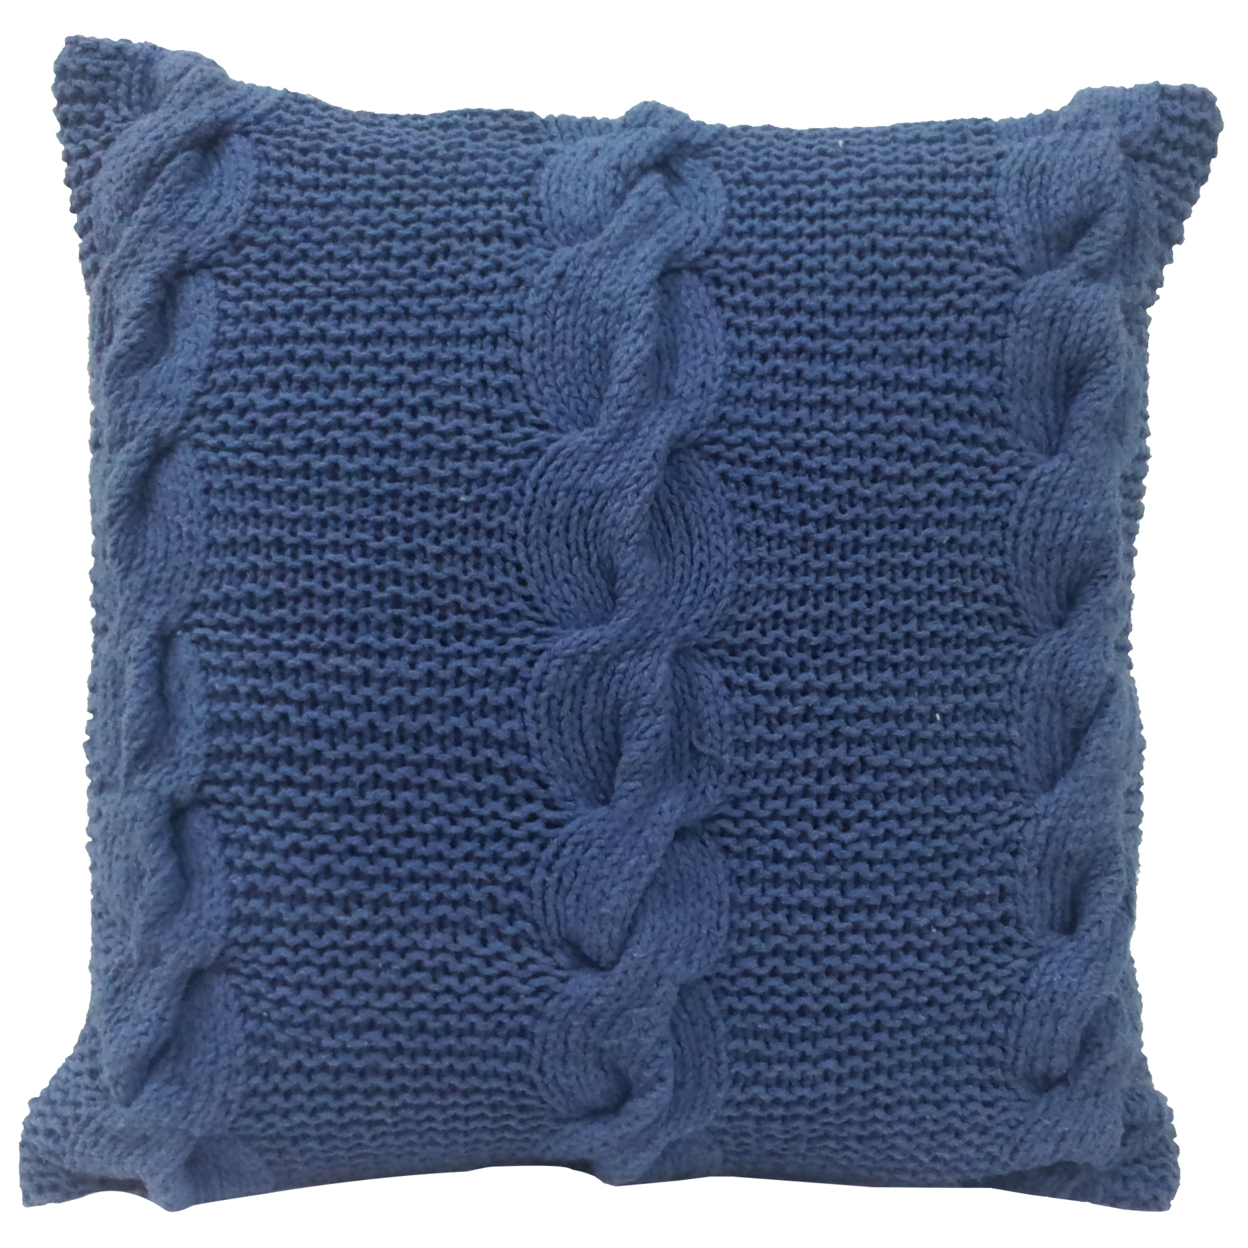 18 X 18 Inch Decorative Cable Knit Hand Woven Cotton Pillow, Set Of 2, Blue- Saltoro Sherpi